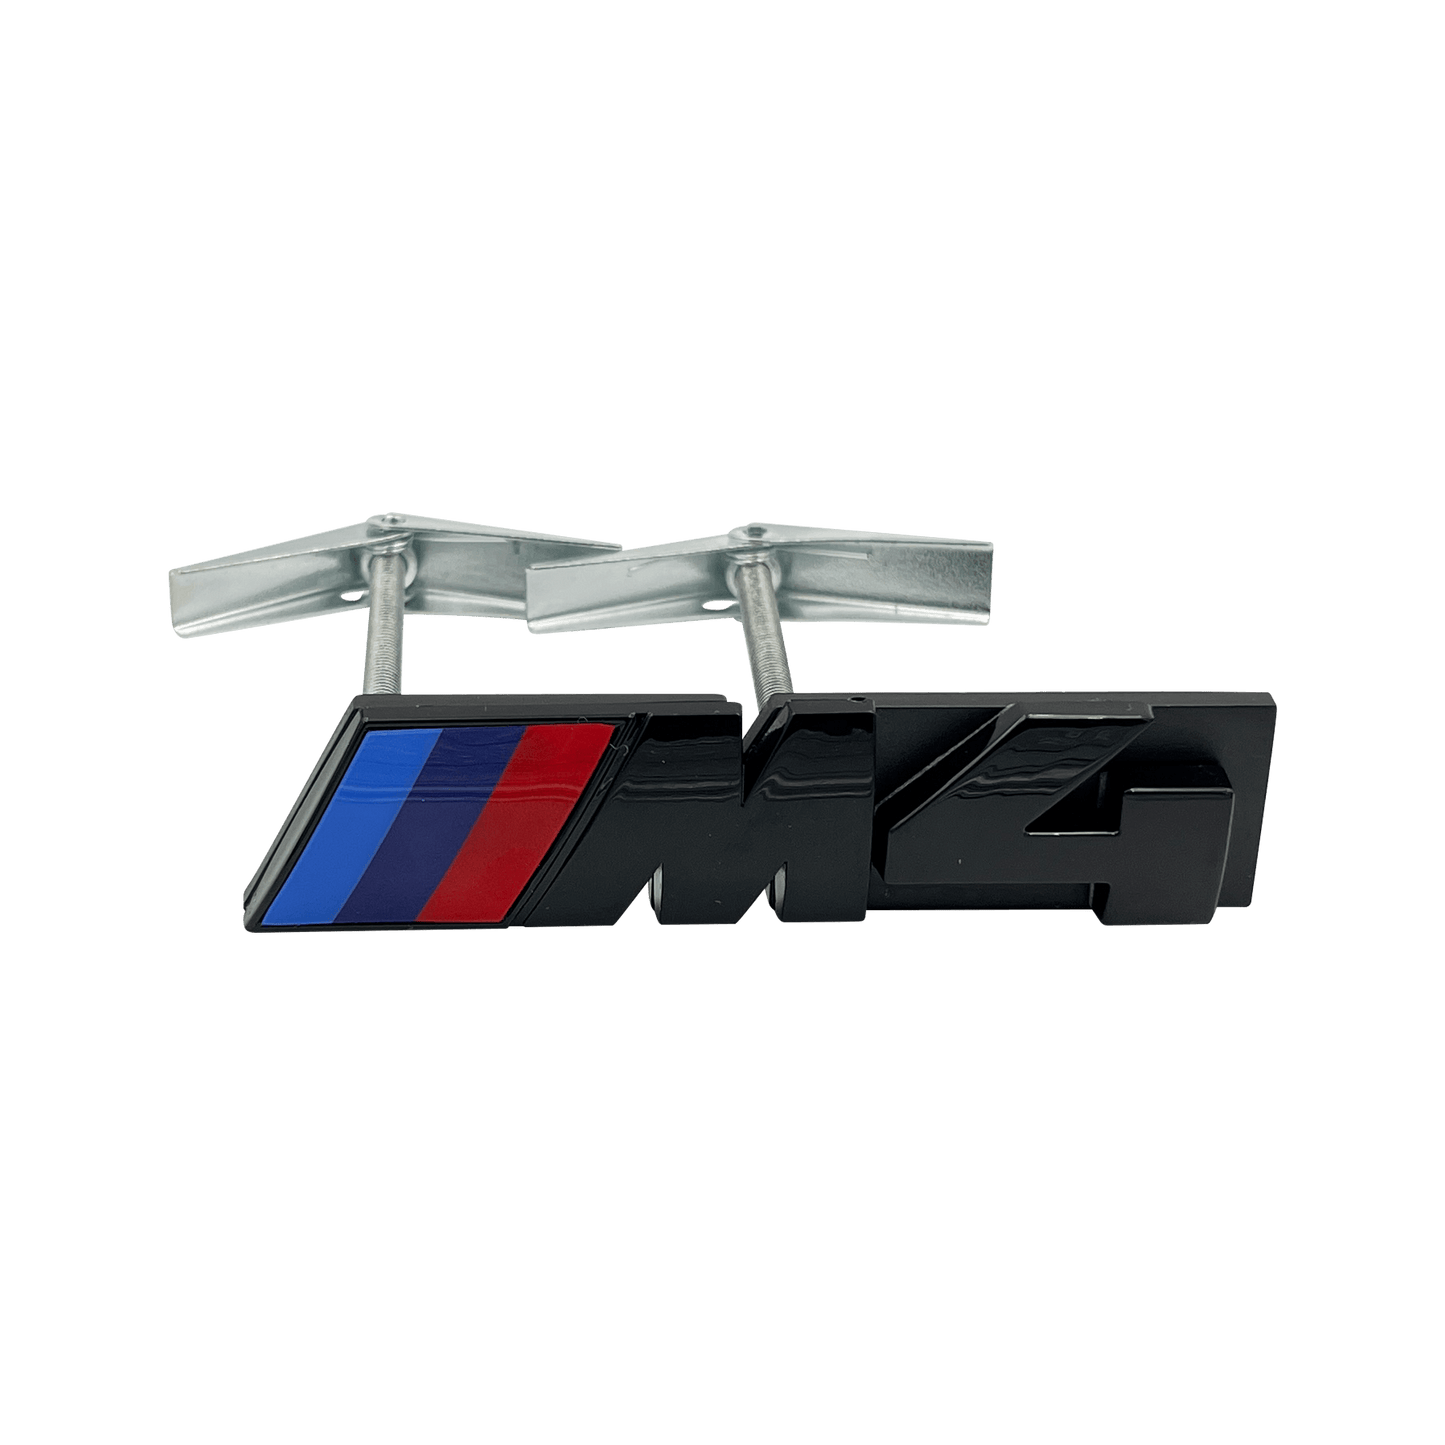 Svart BMW M4 Emblem foran